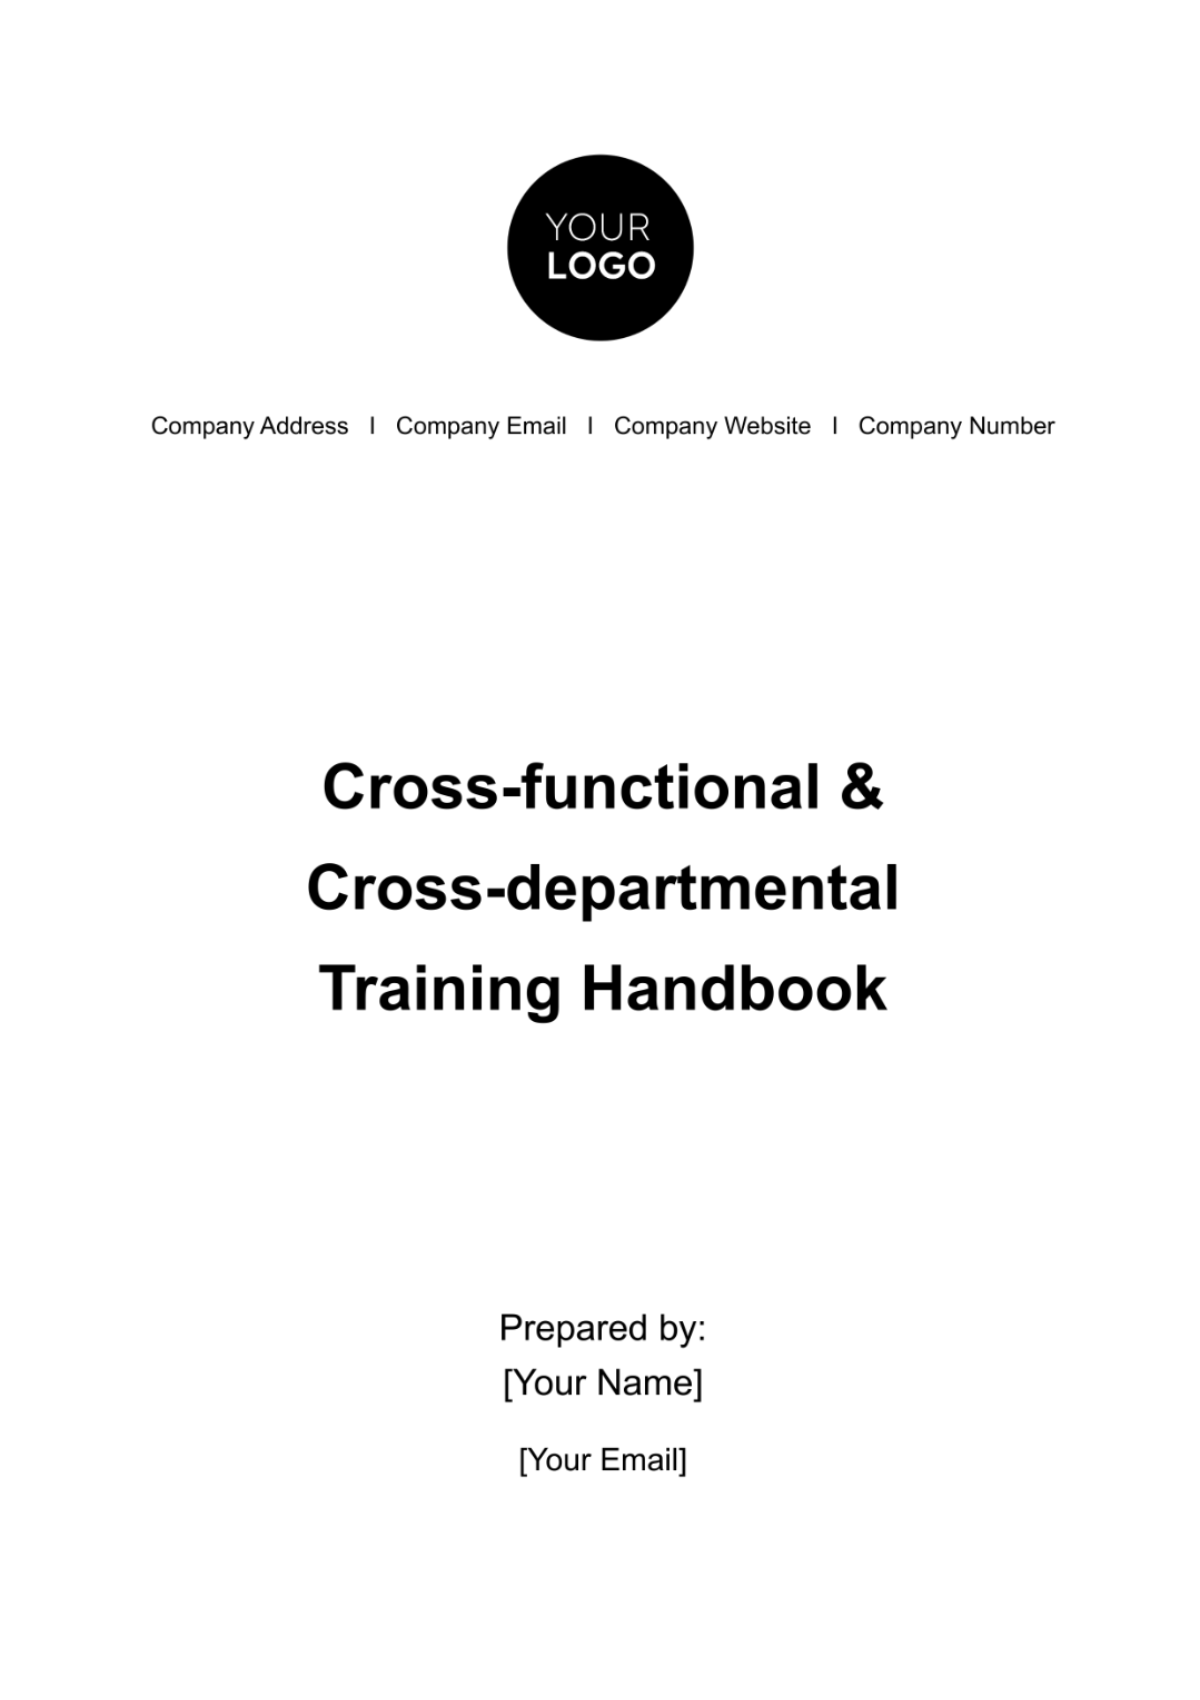 Free Cross-functional & Cross-departmental Training Handbook HR Template